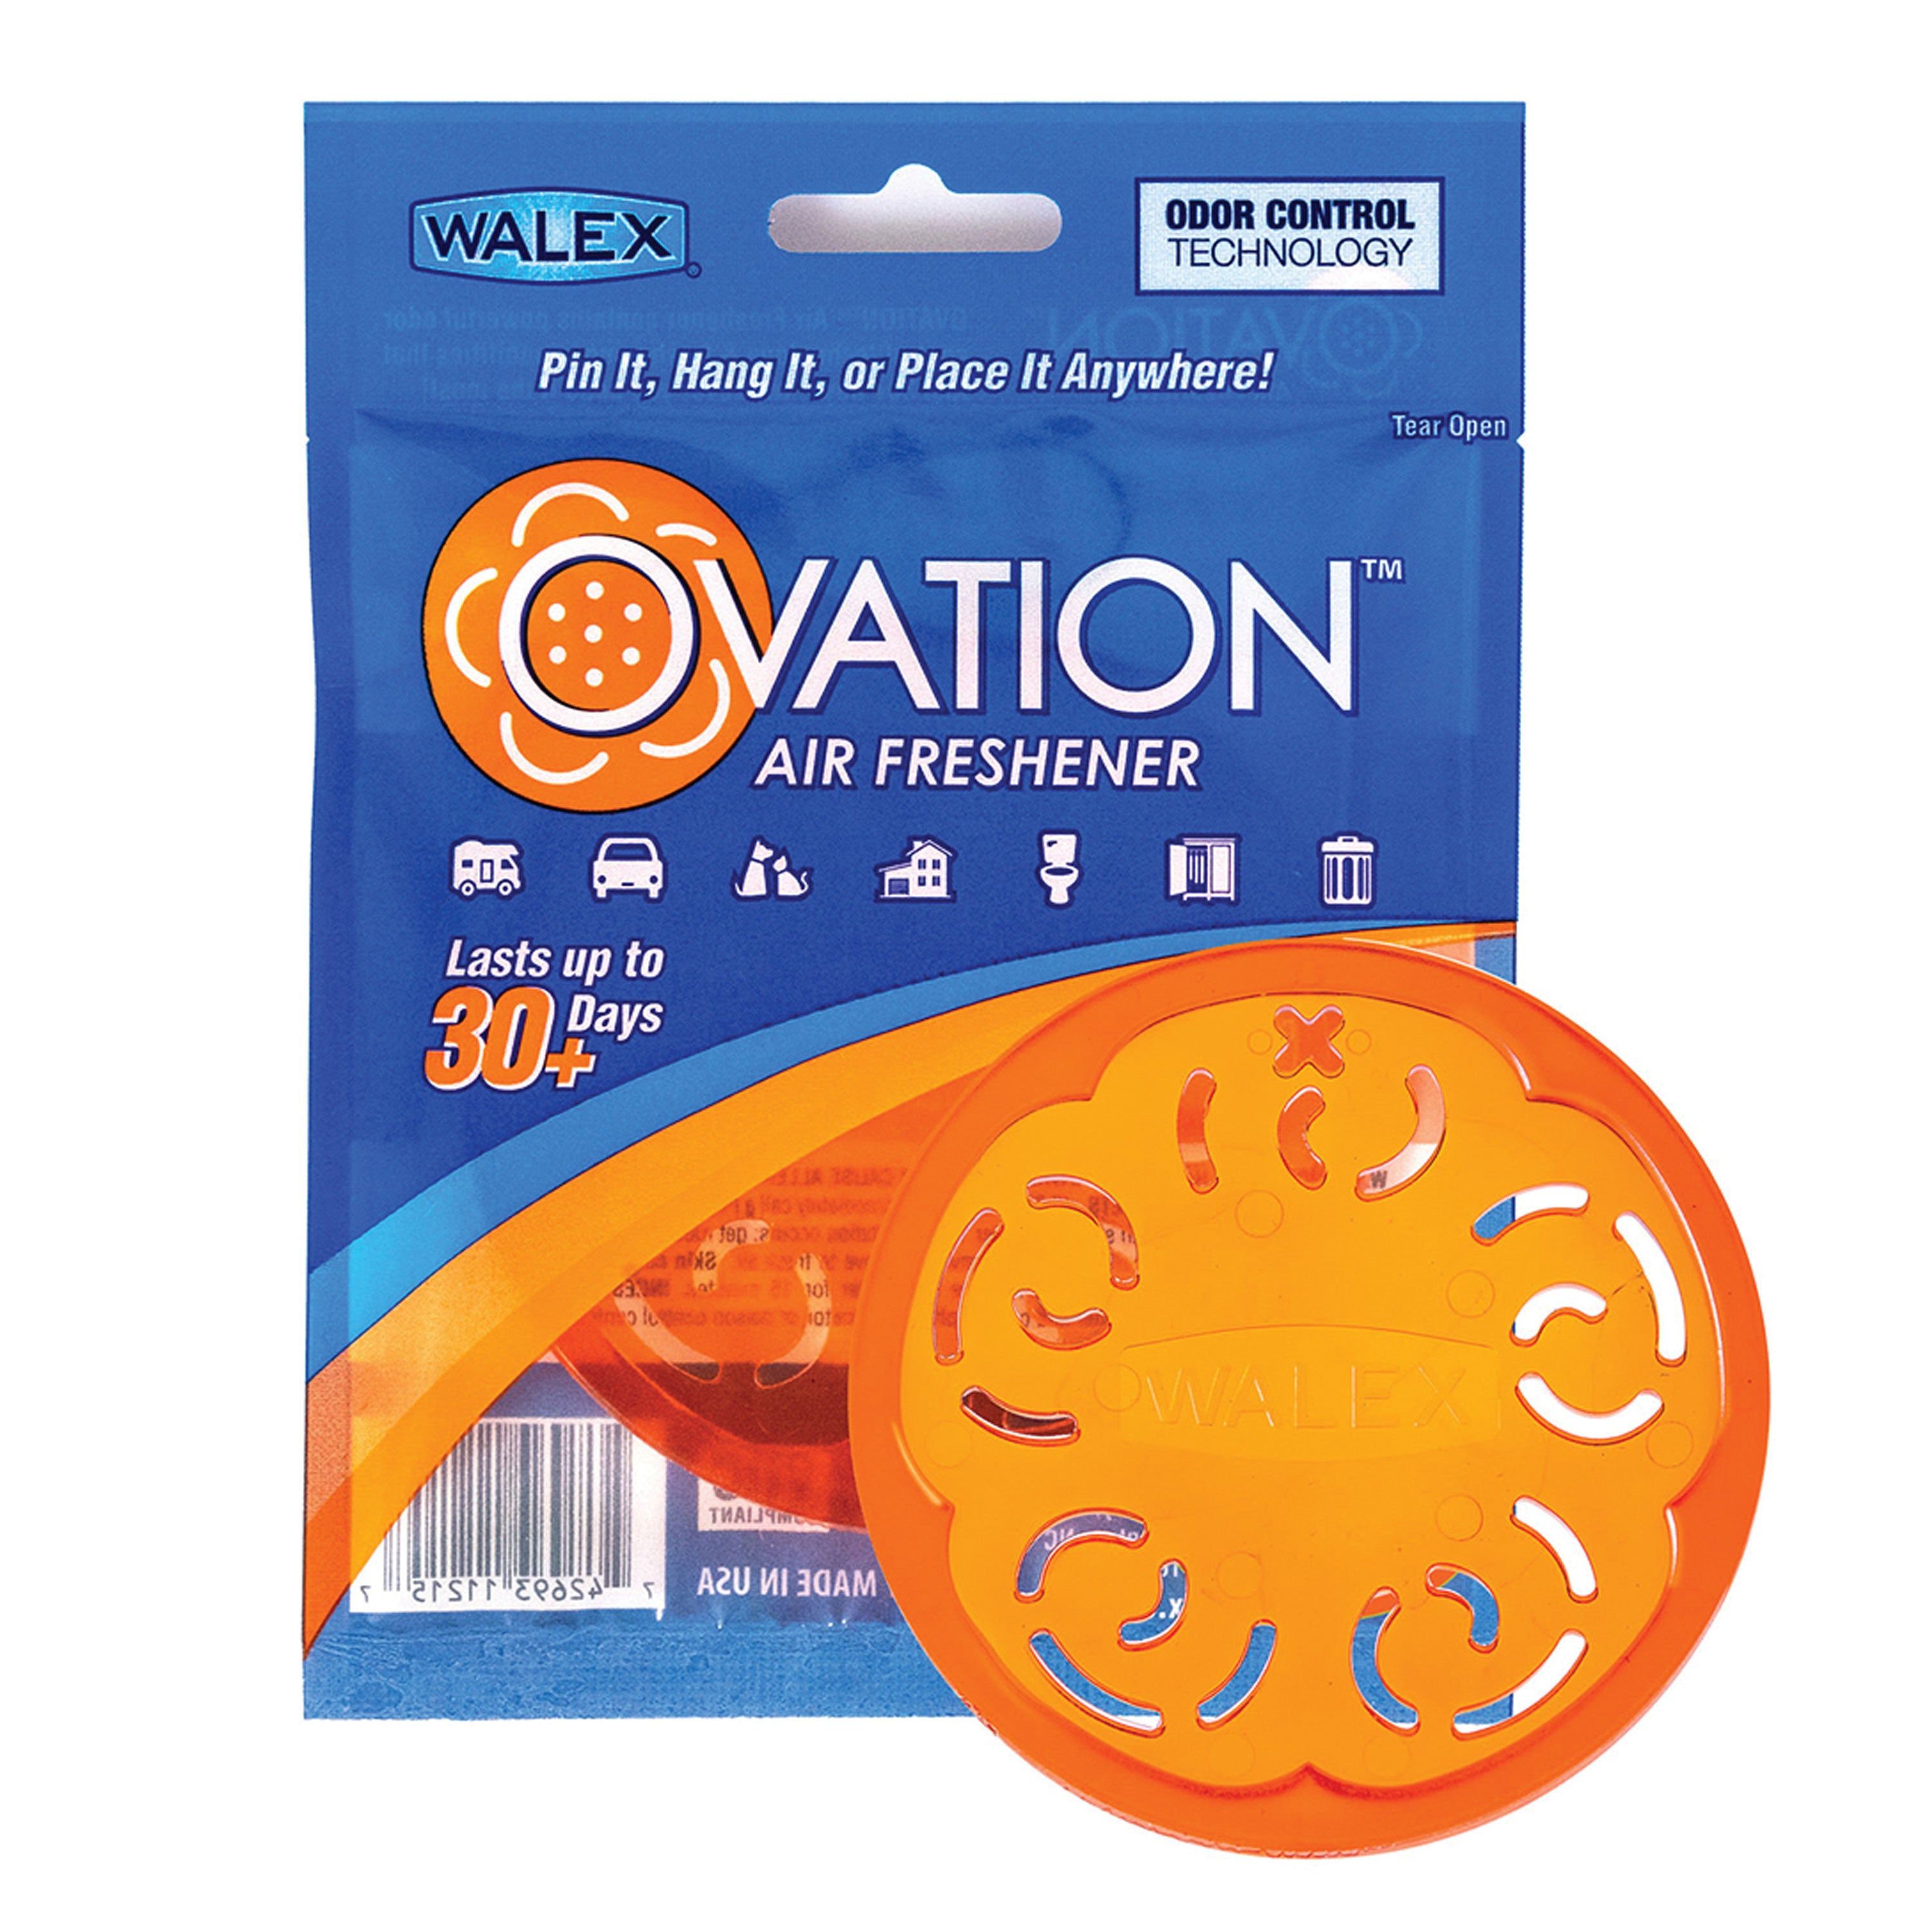 Walex OVAFCIT1 Portable Ovation Air Freshener - Citrus Scent, Single